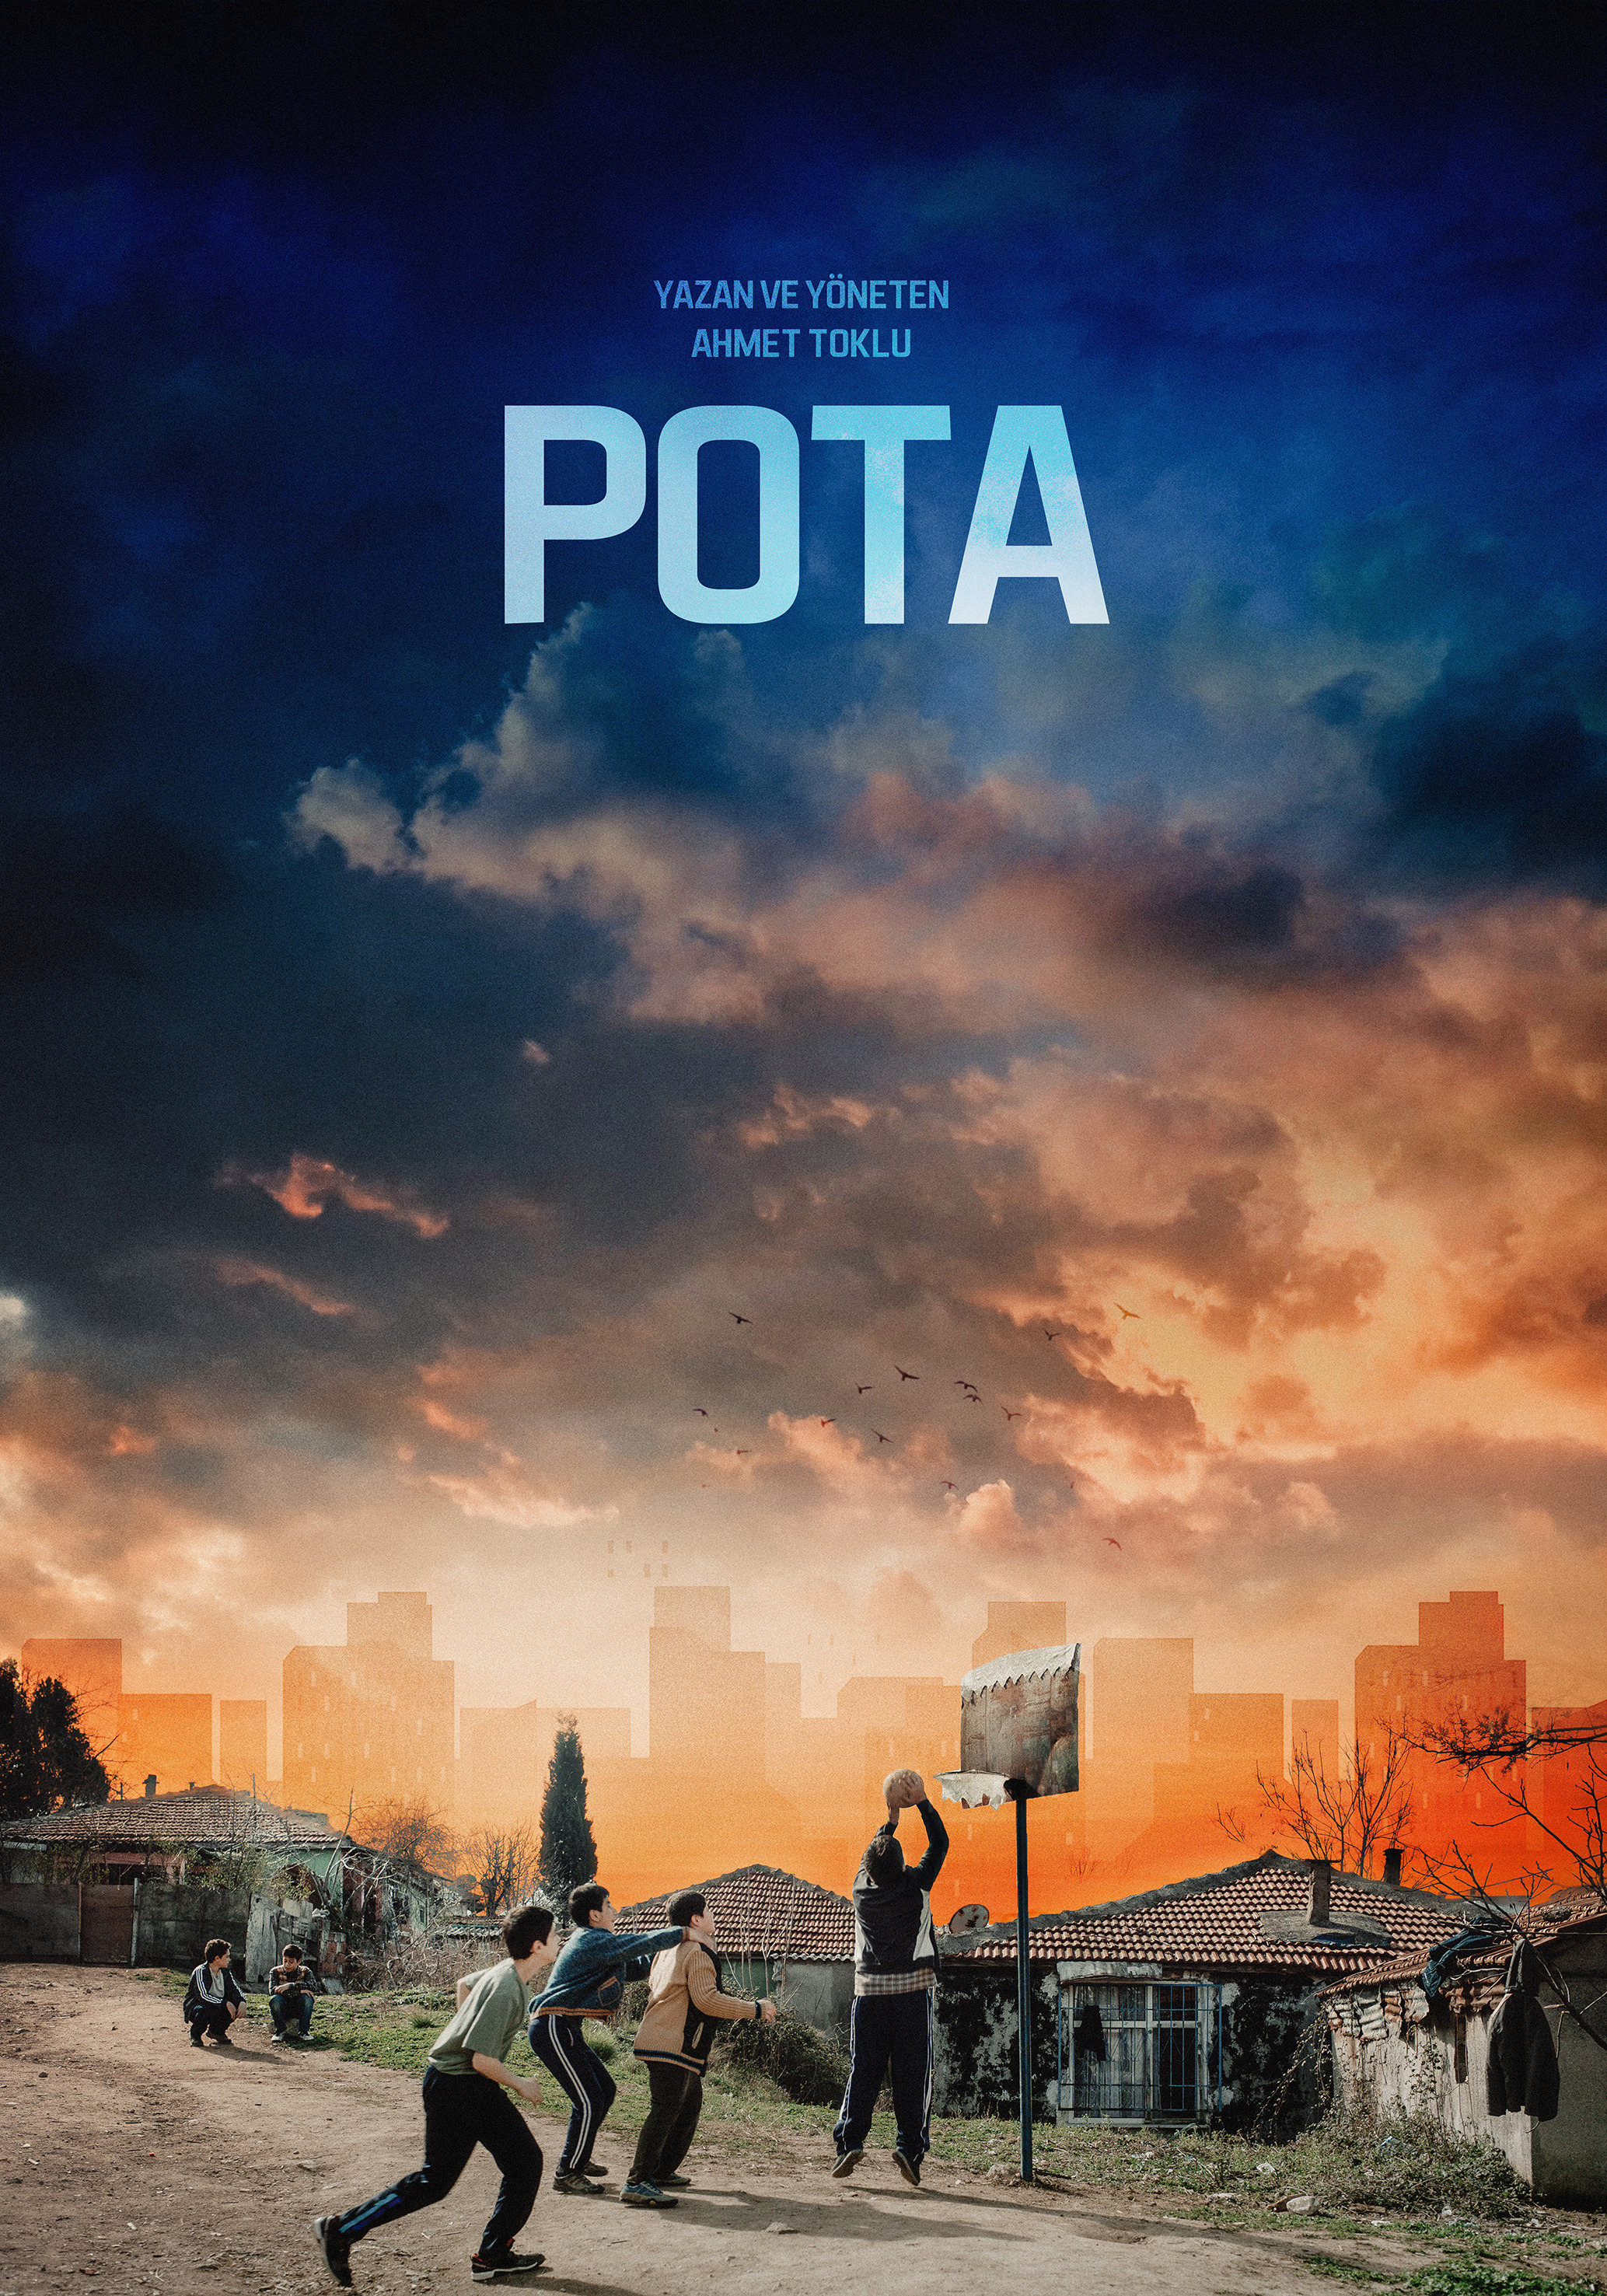 Mega Sized Movie Poster Image for Pota (#11 of 11)